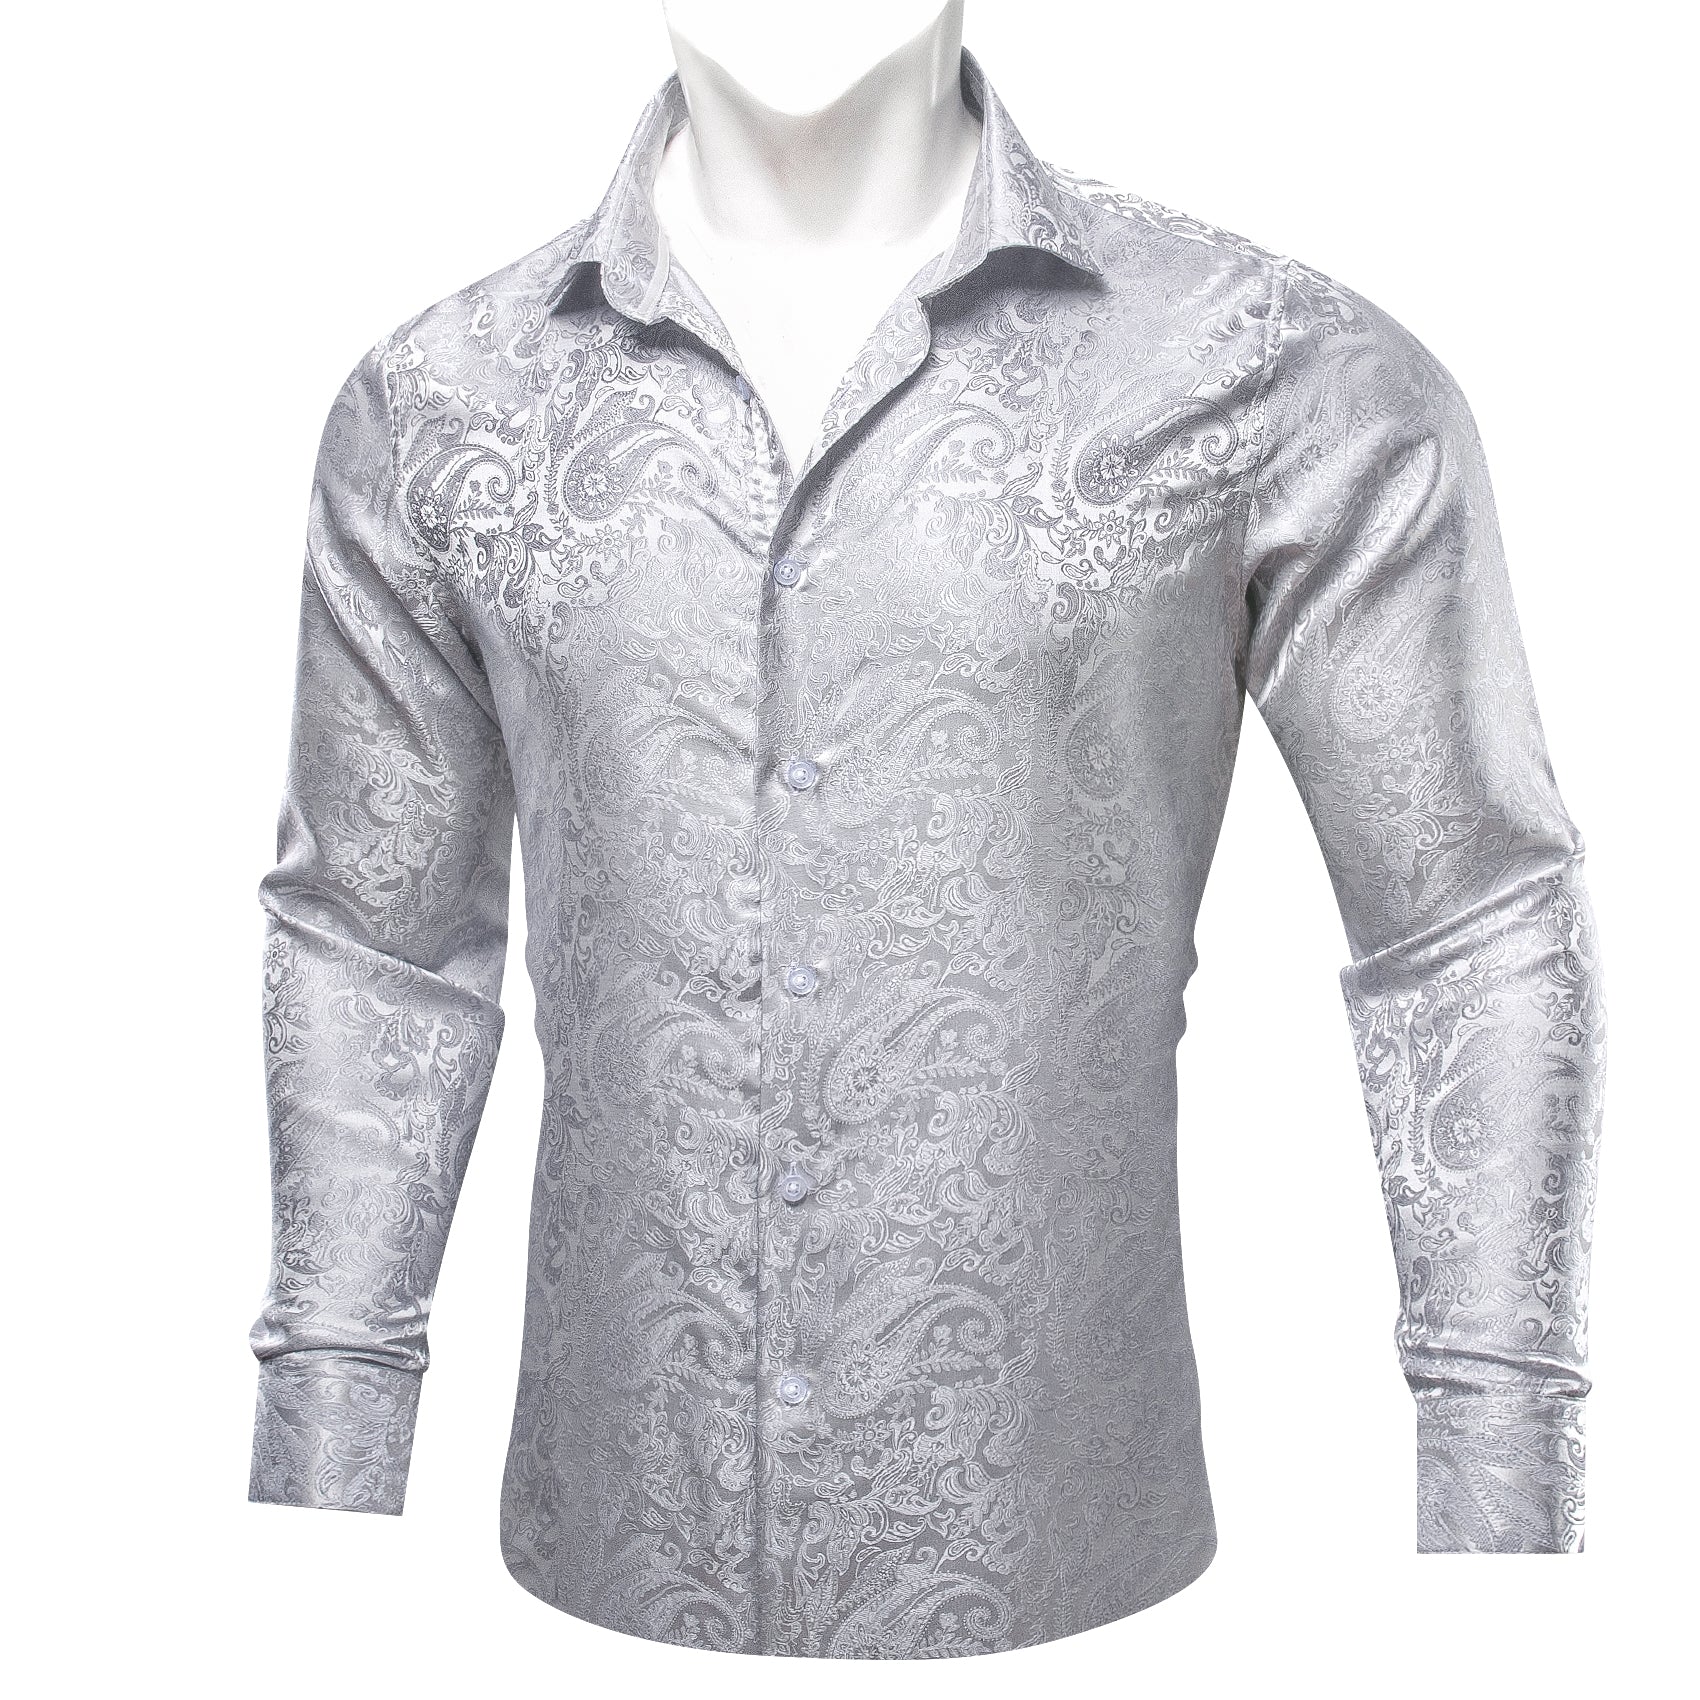 Barry Wang Long Sleeve Shirt Grey White Paisley Men's Silk Dress Shirt